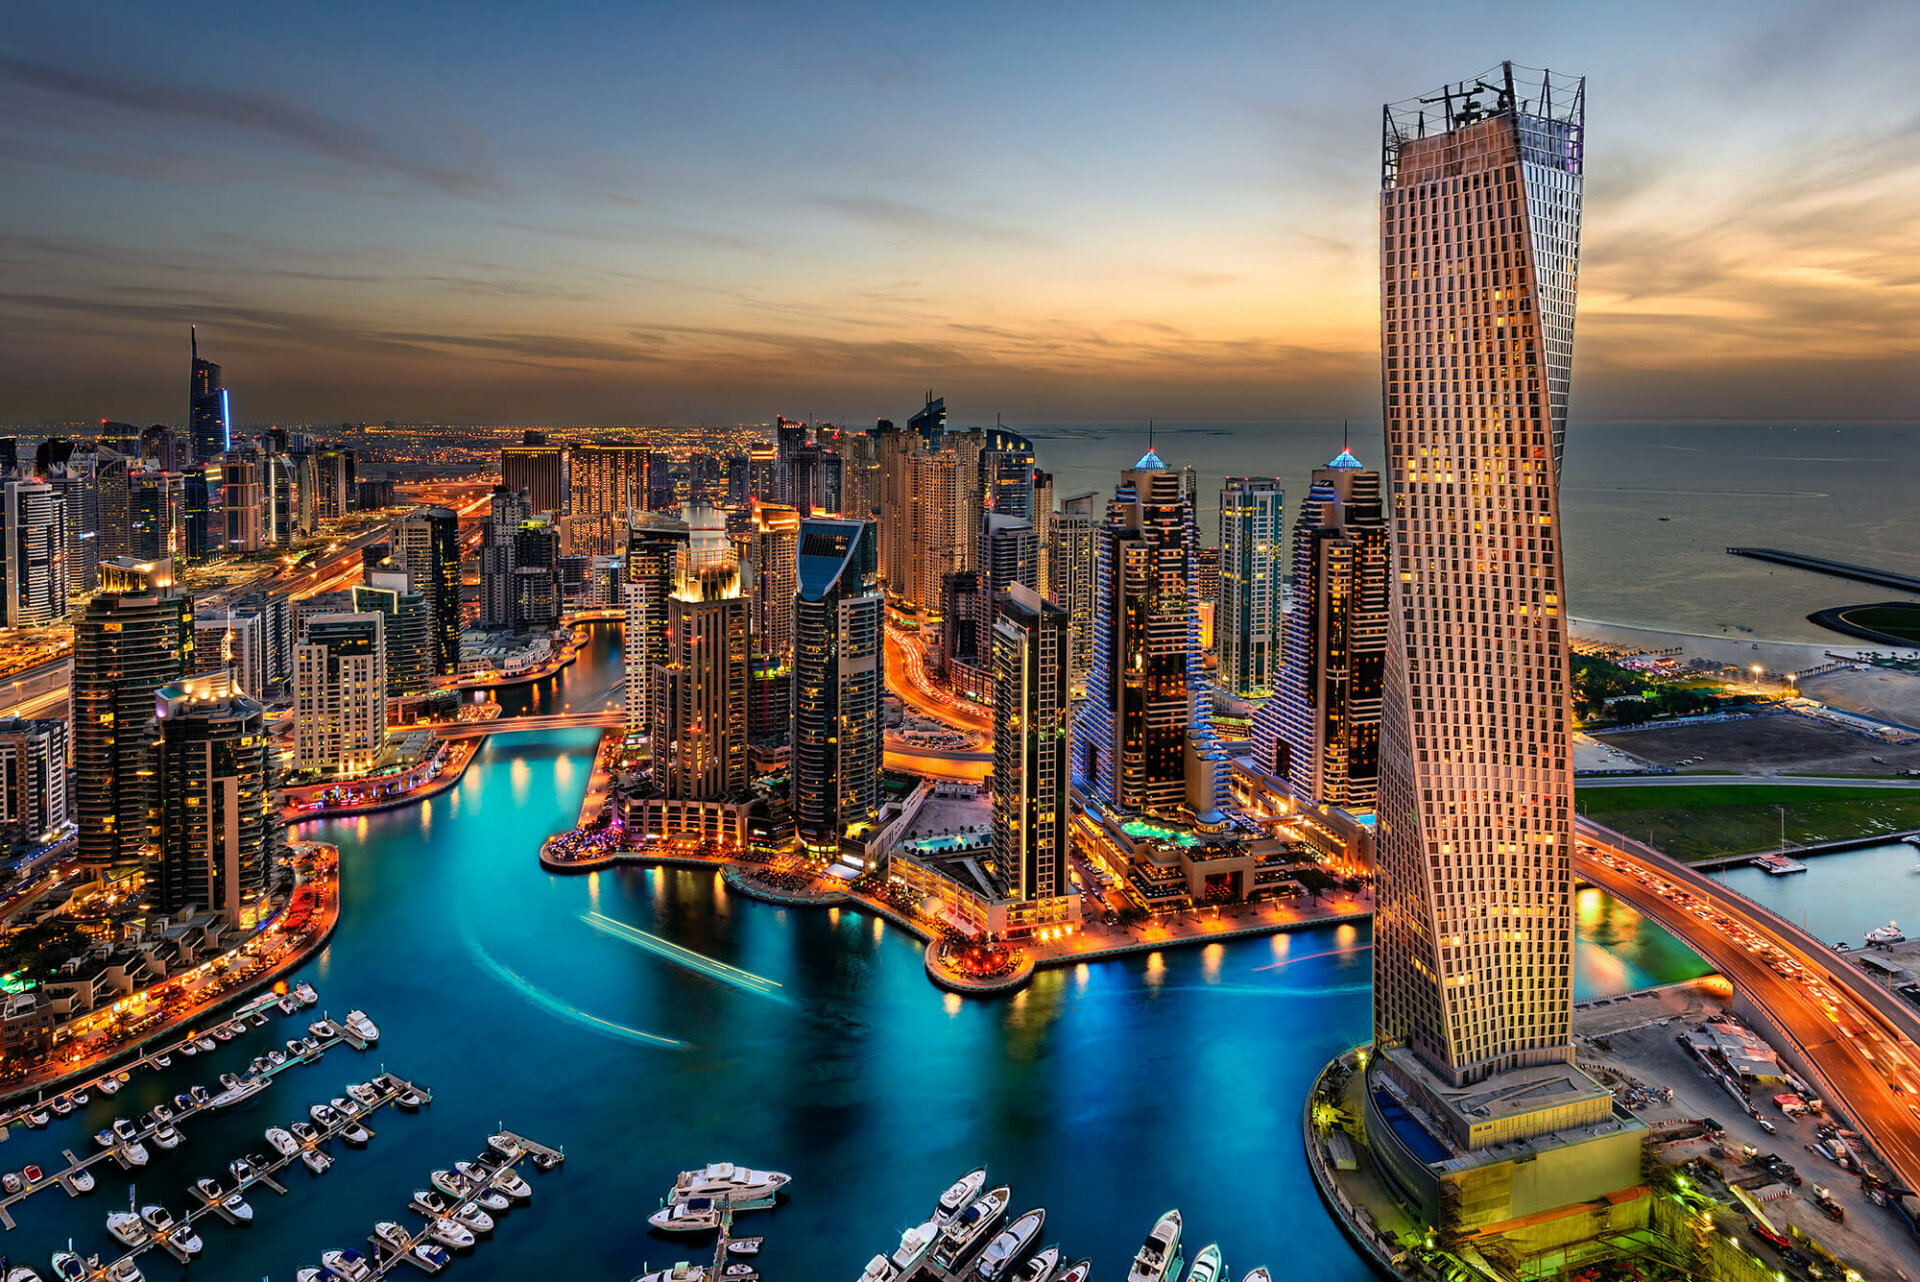 The Dubai Marina District